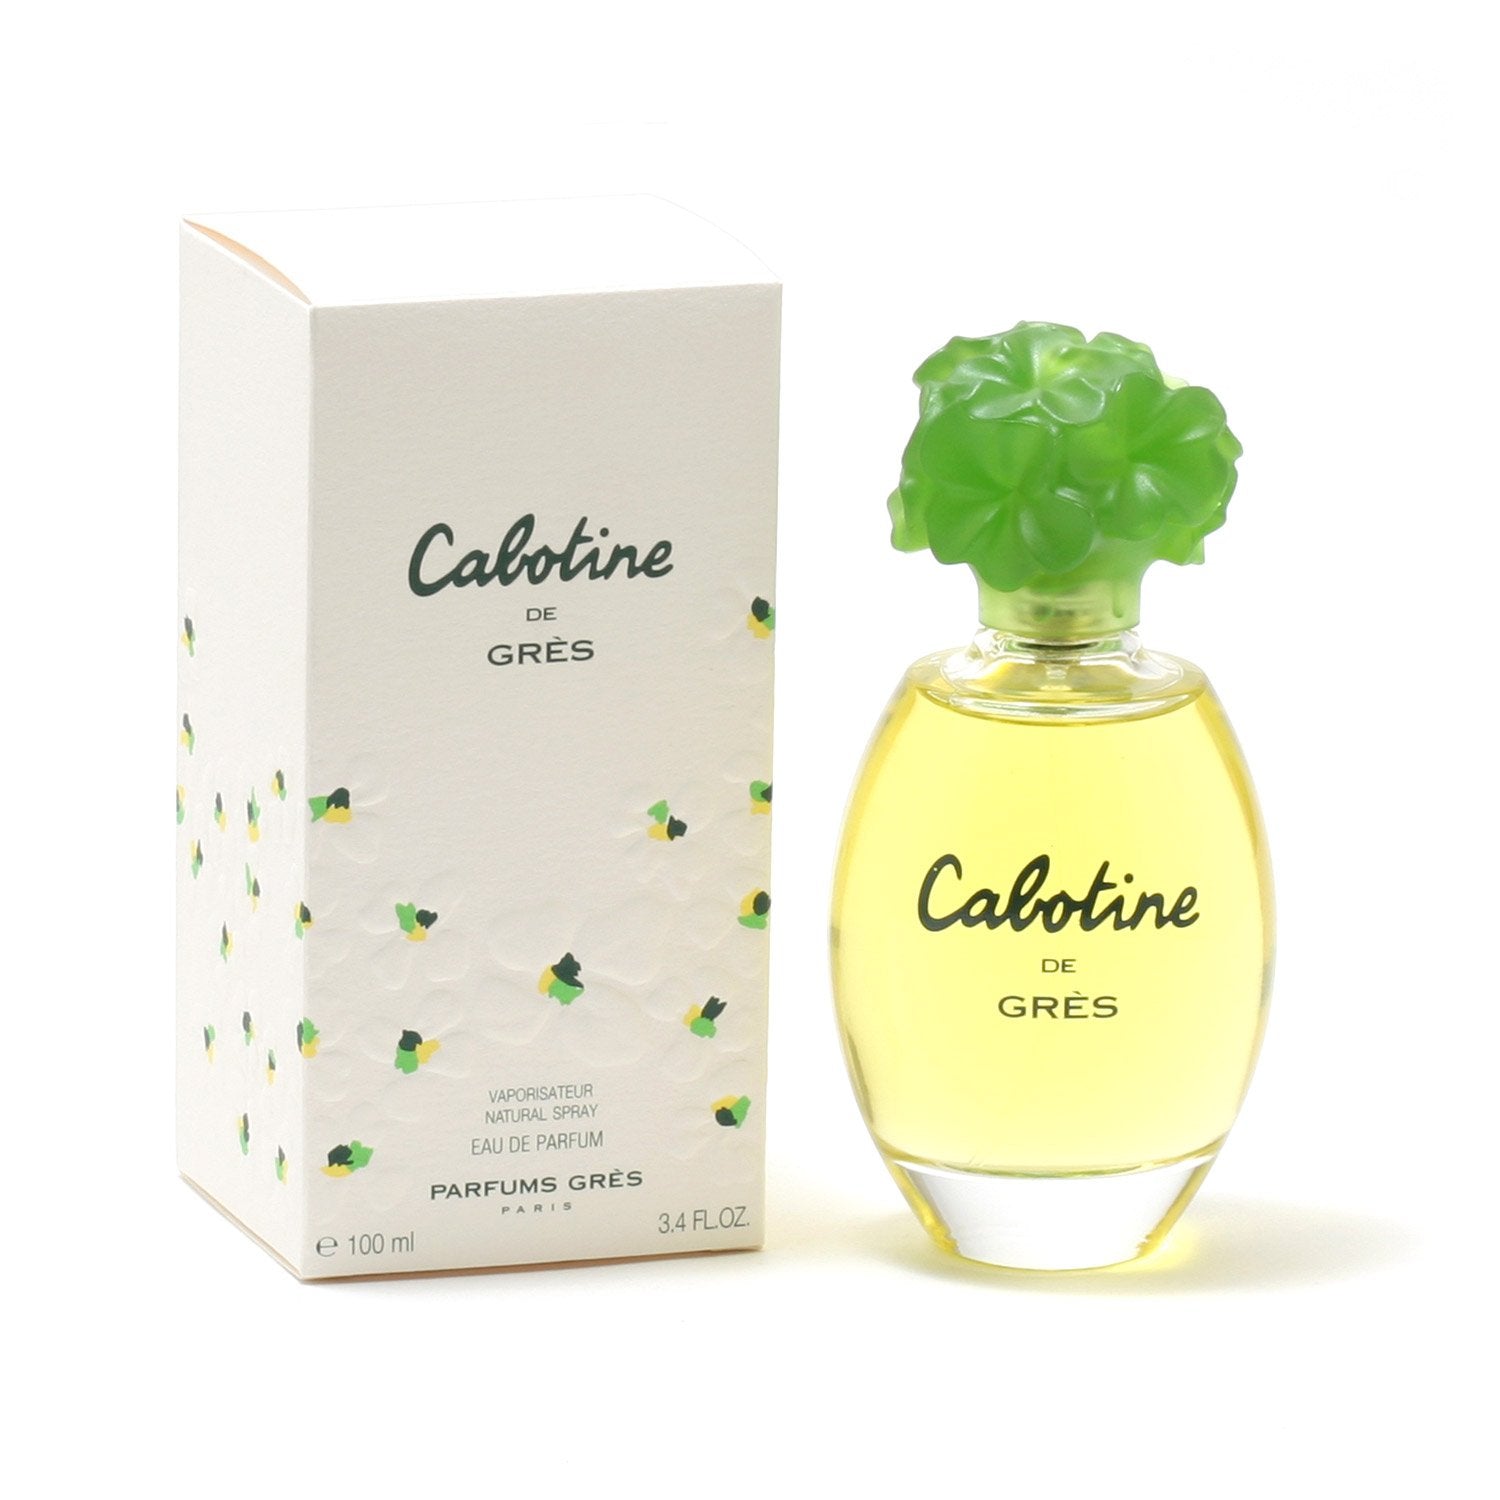 Perfume - CABOTINE FOR WOMEN BY PARFUMS GRES - EAU DE PARFUM SPRAY, 3.4 OZ